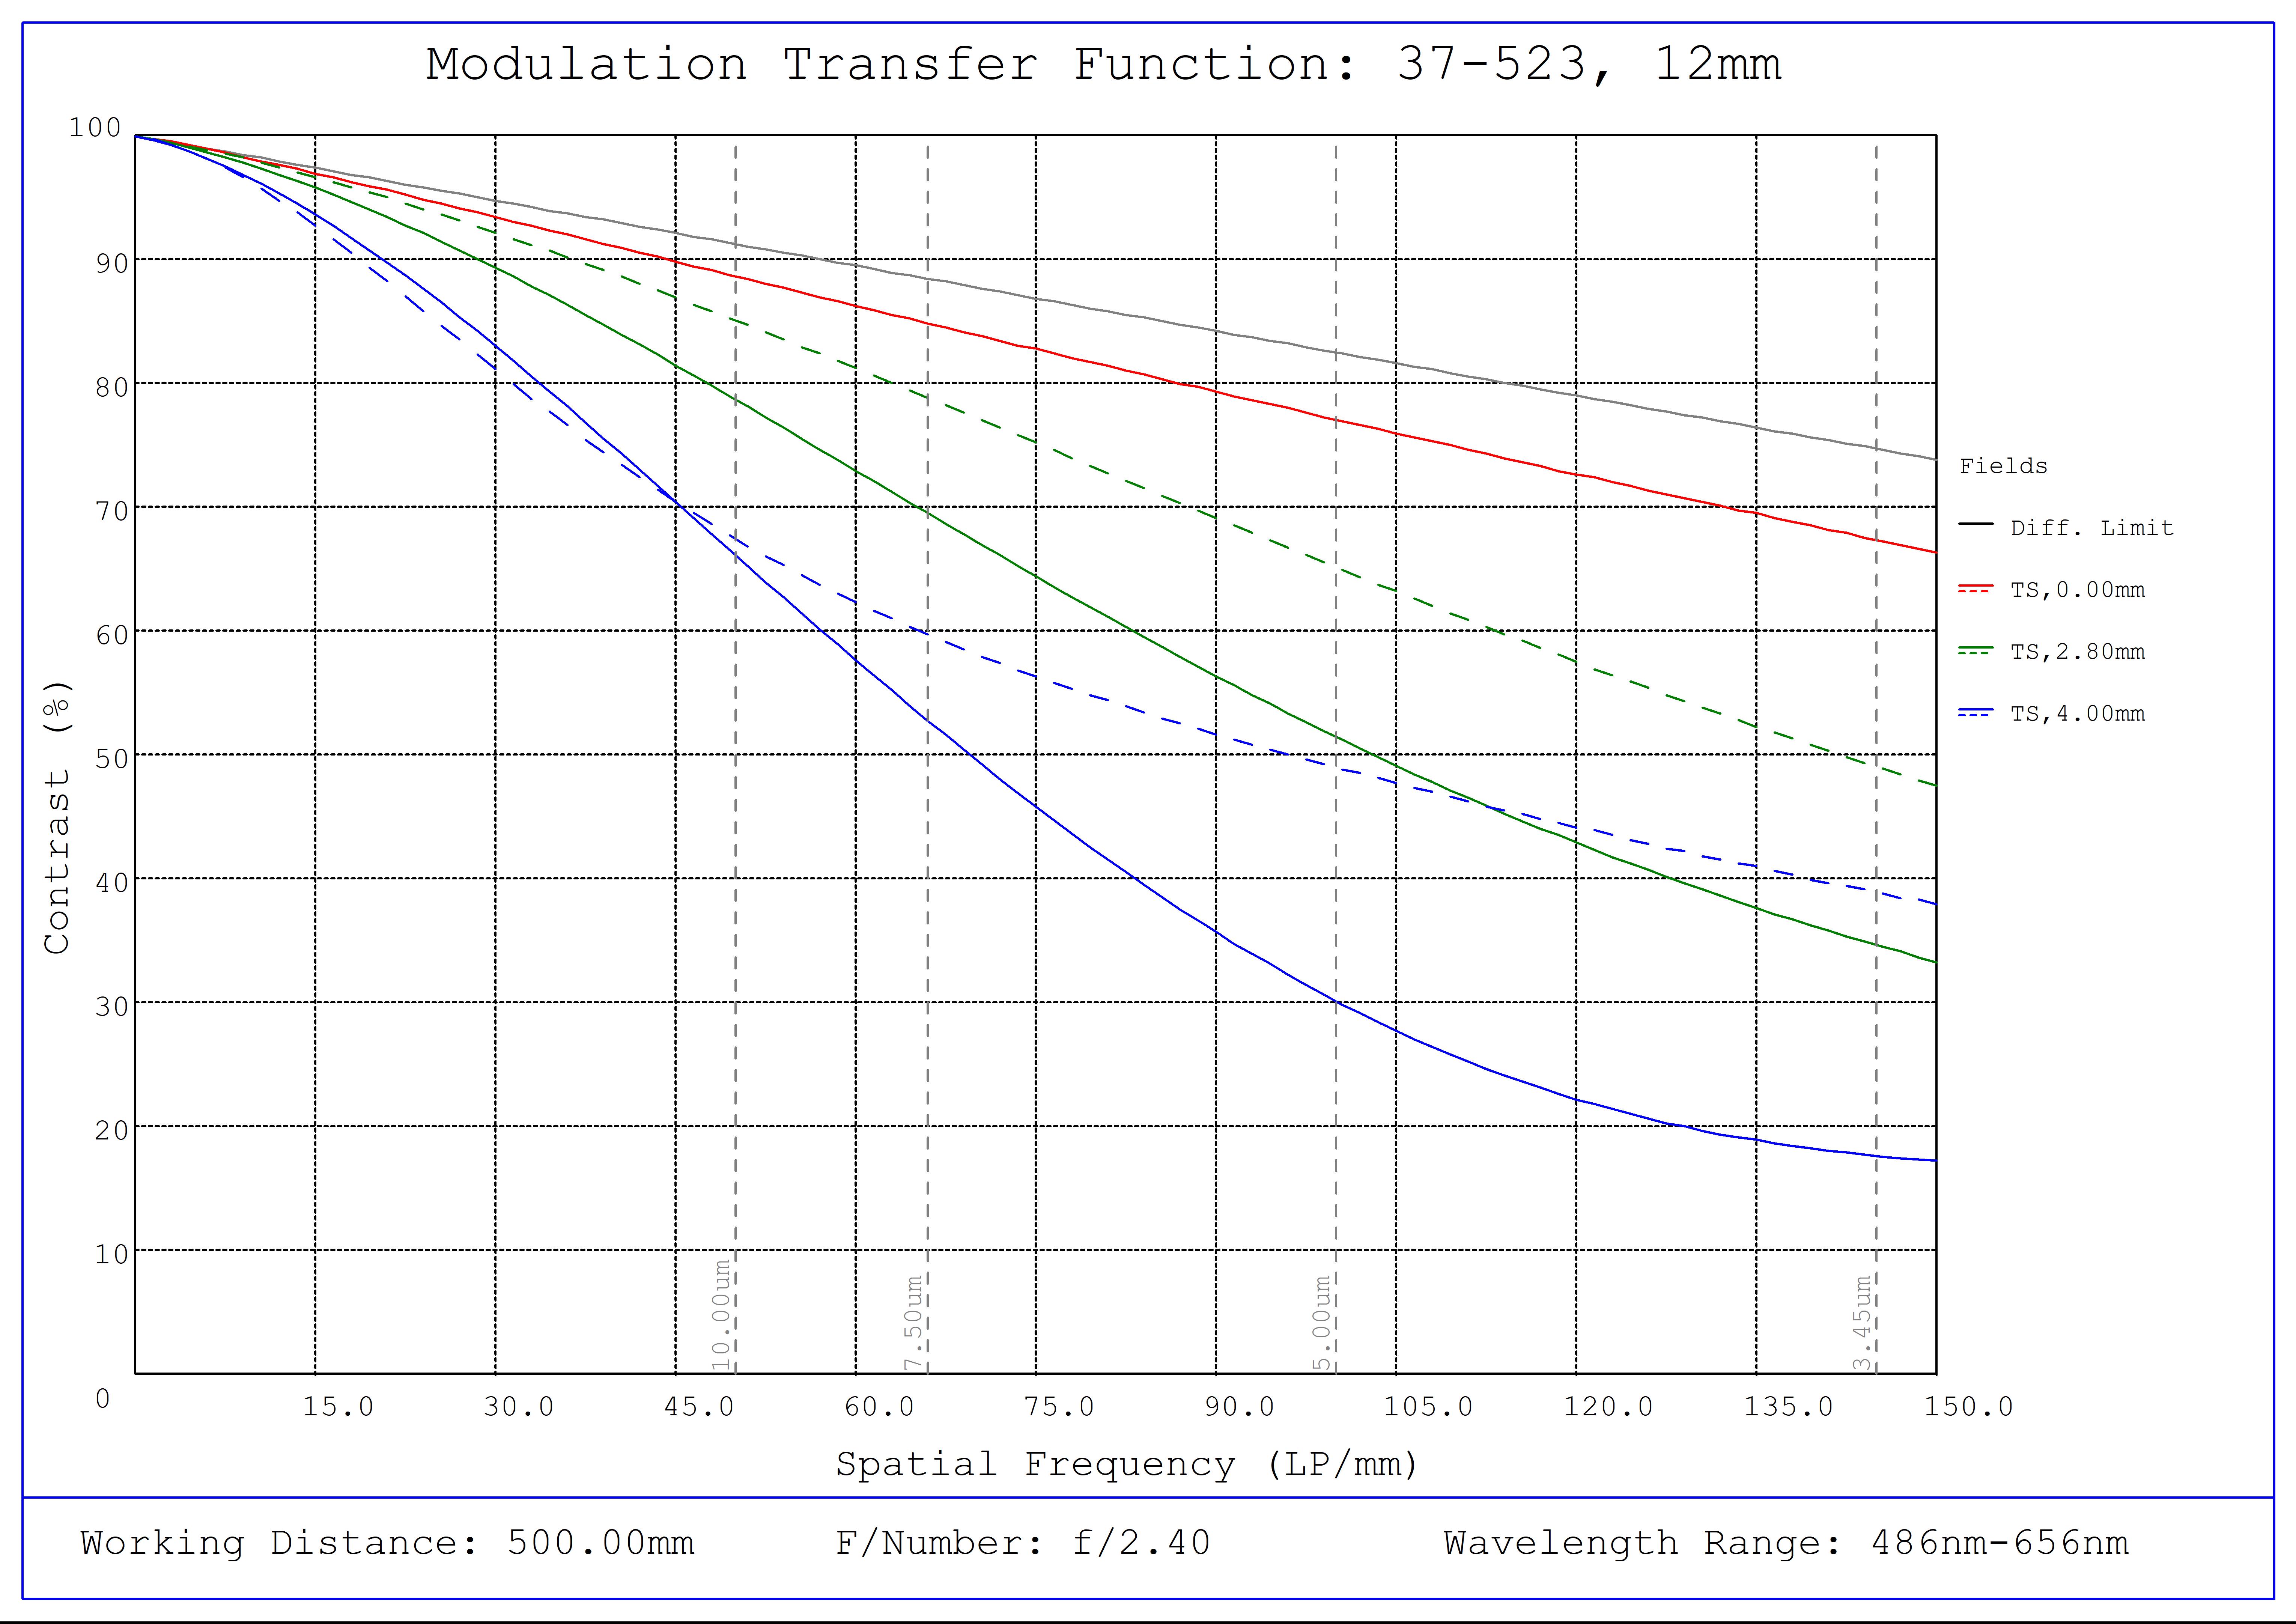 #37-523, 12mm FL, Liquid Lens M12 Lens, Modulated Transfer Function (MTF) Plot, 500mm Working Distance, f2.4